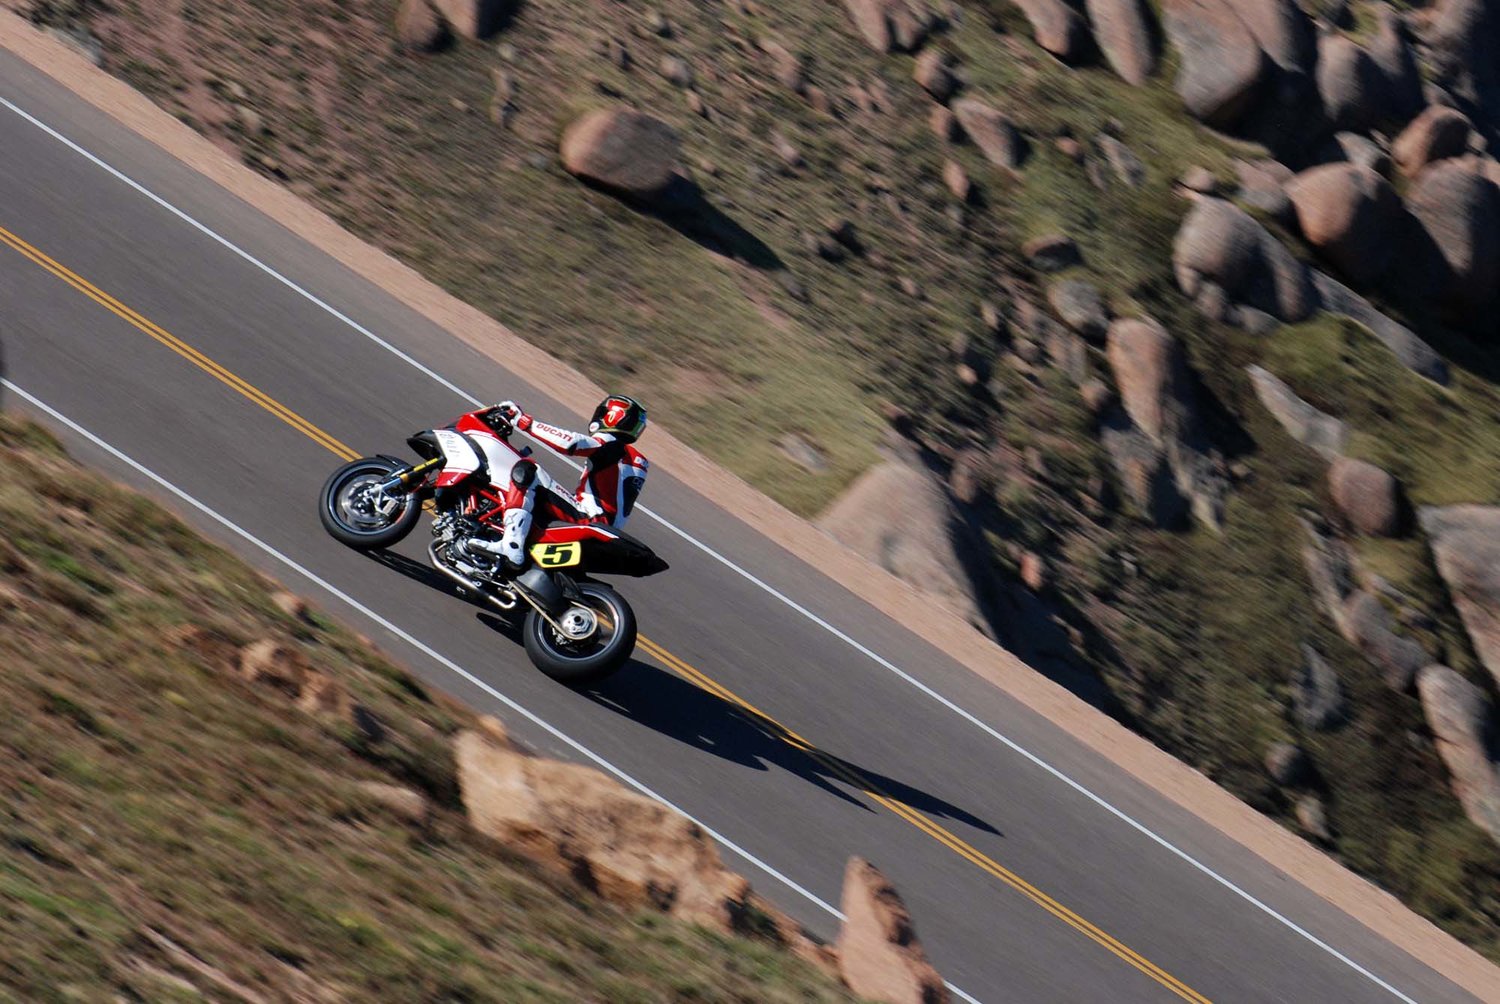 Carlin Dunne falece durante a Pikes Peak International Hill Climb - Ducati  - Notícias - Andar de Moto